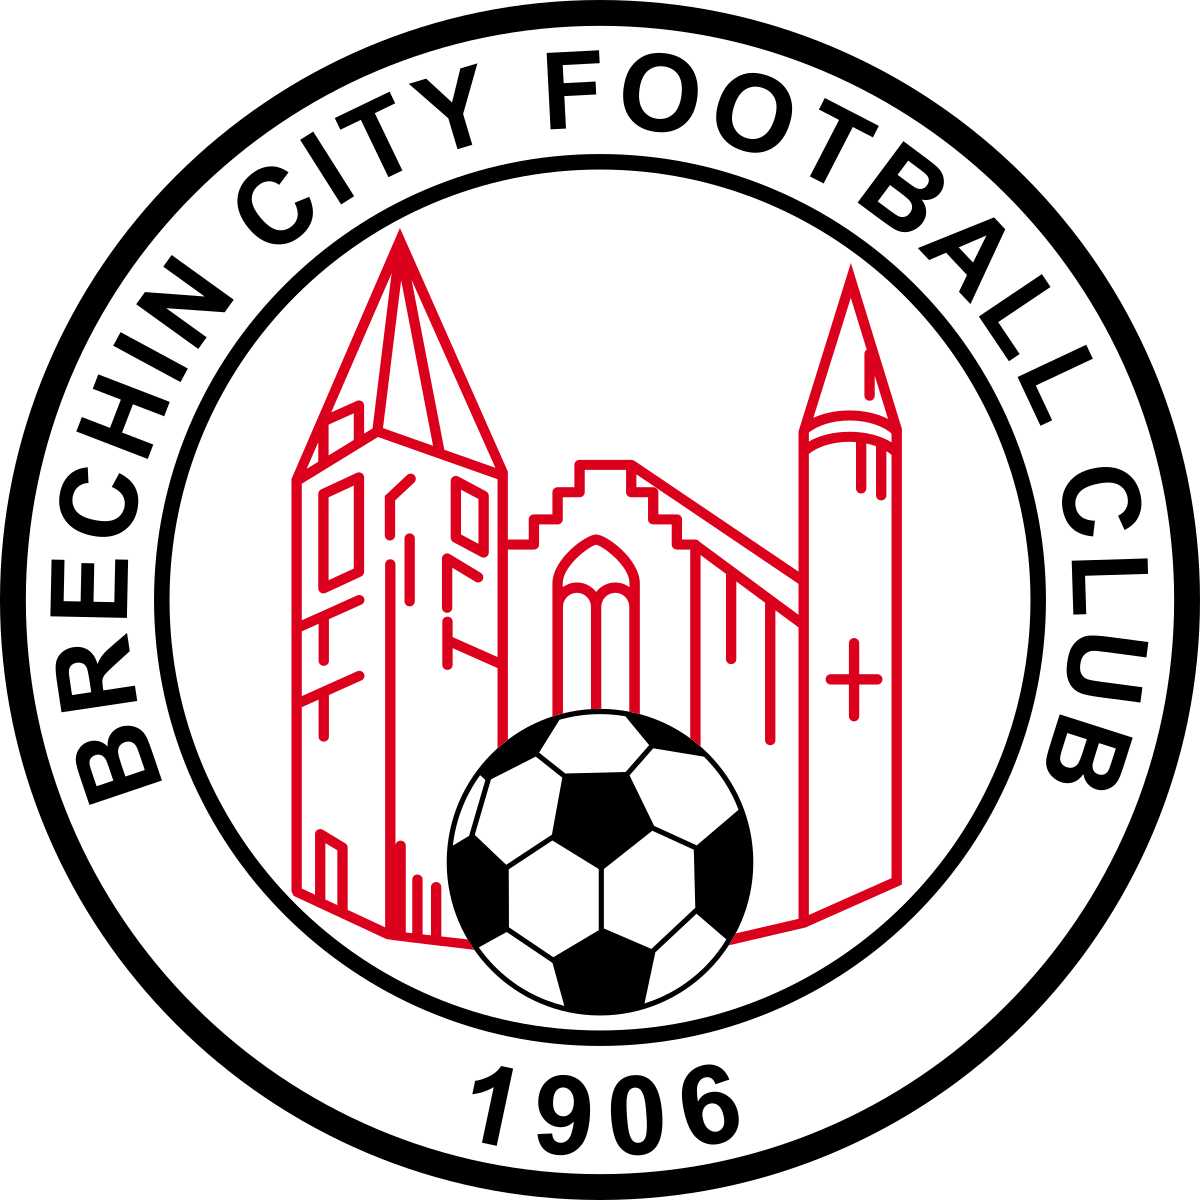 Brechin City (loan)